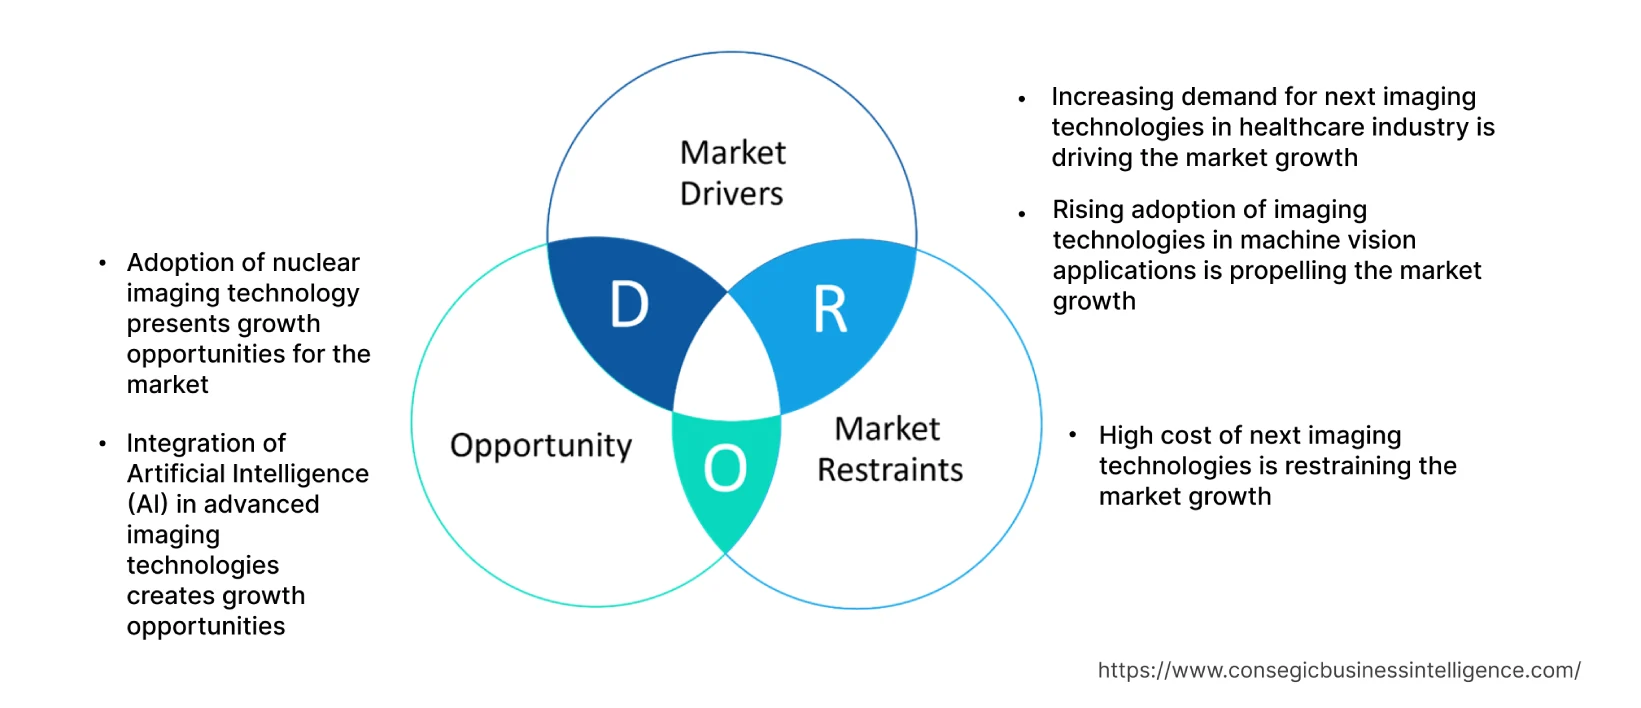 Next Imaging Technology Market Dynamics